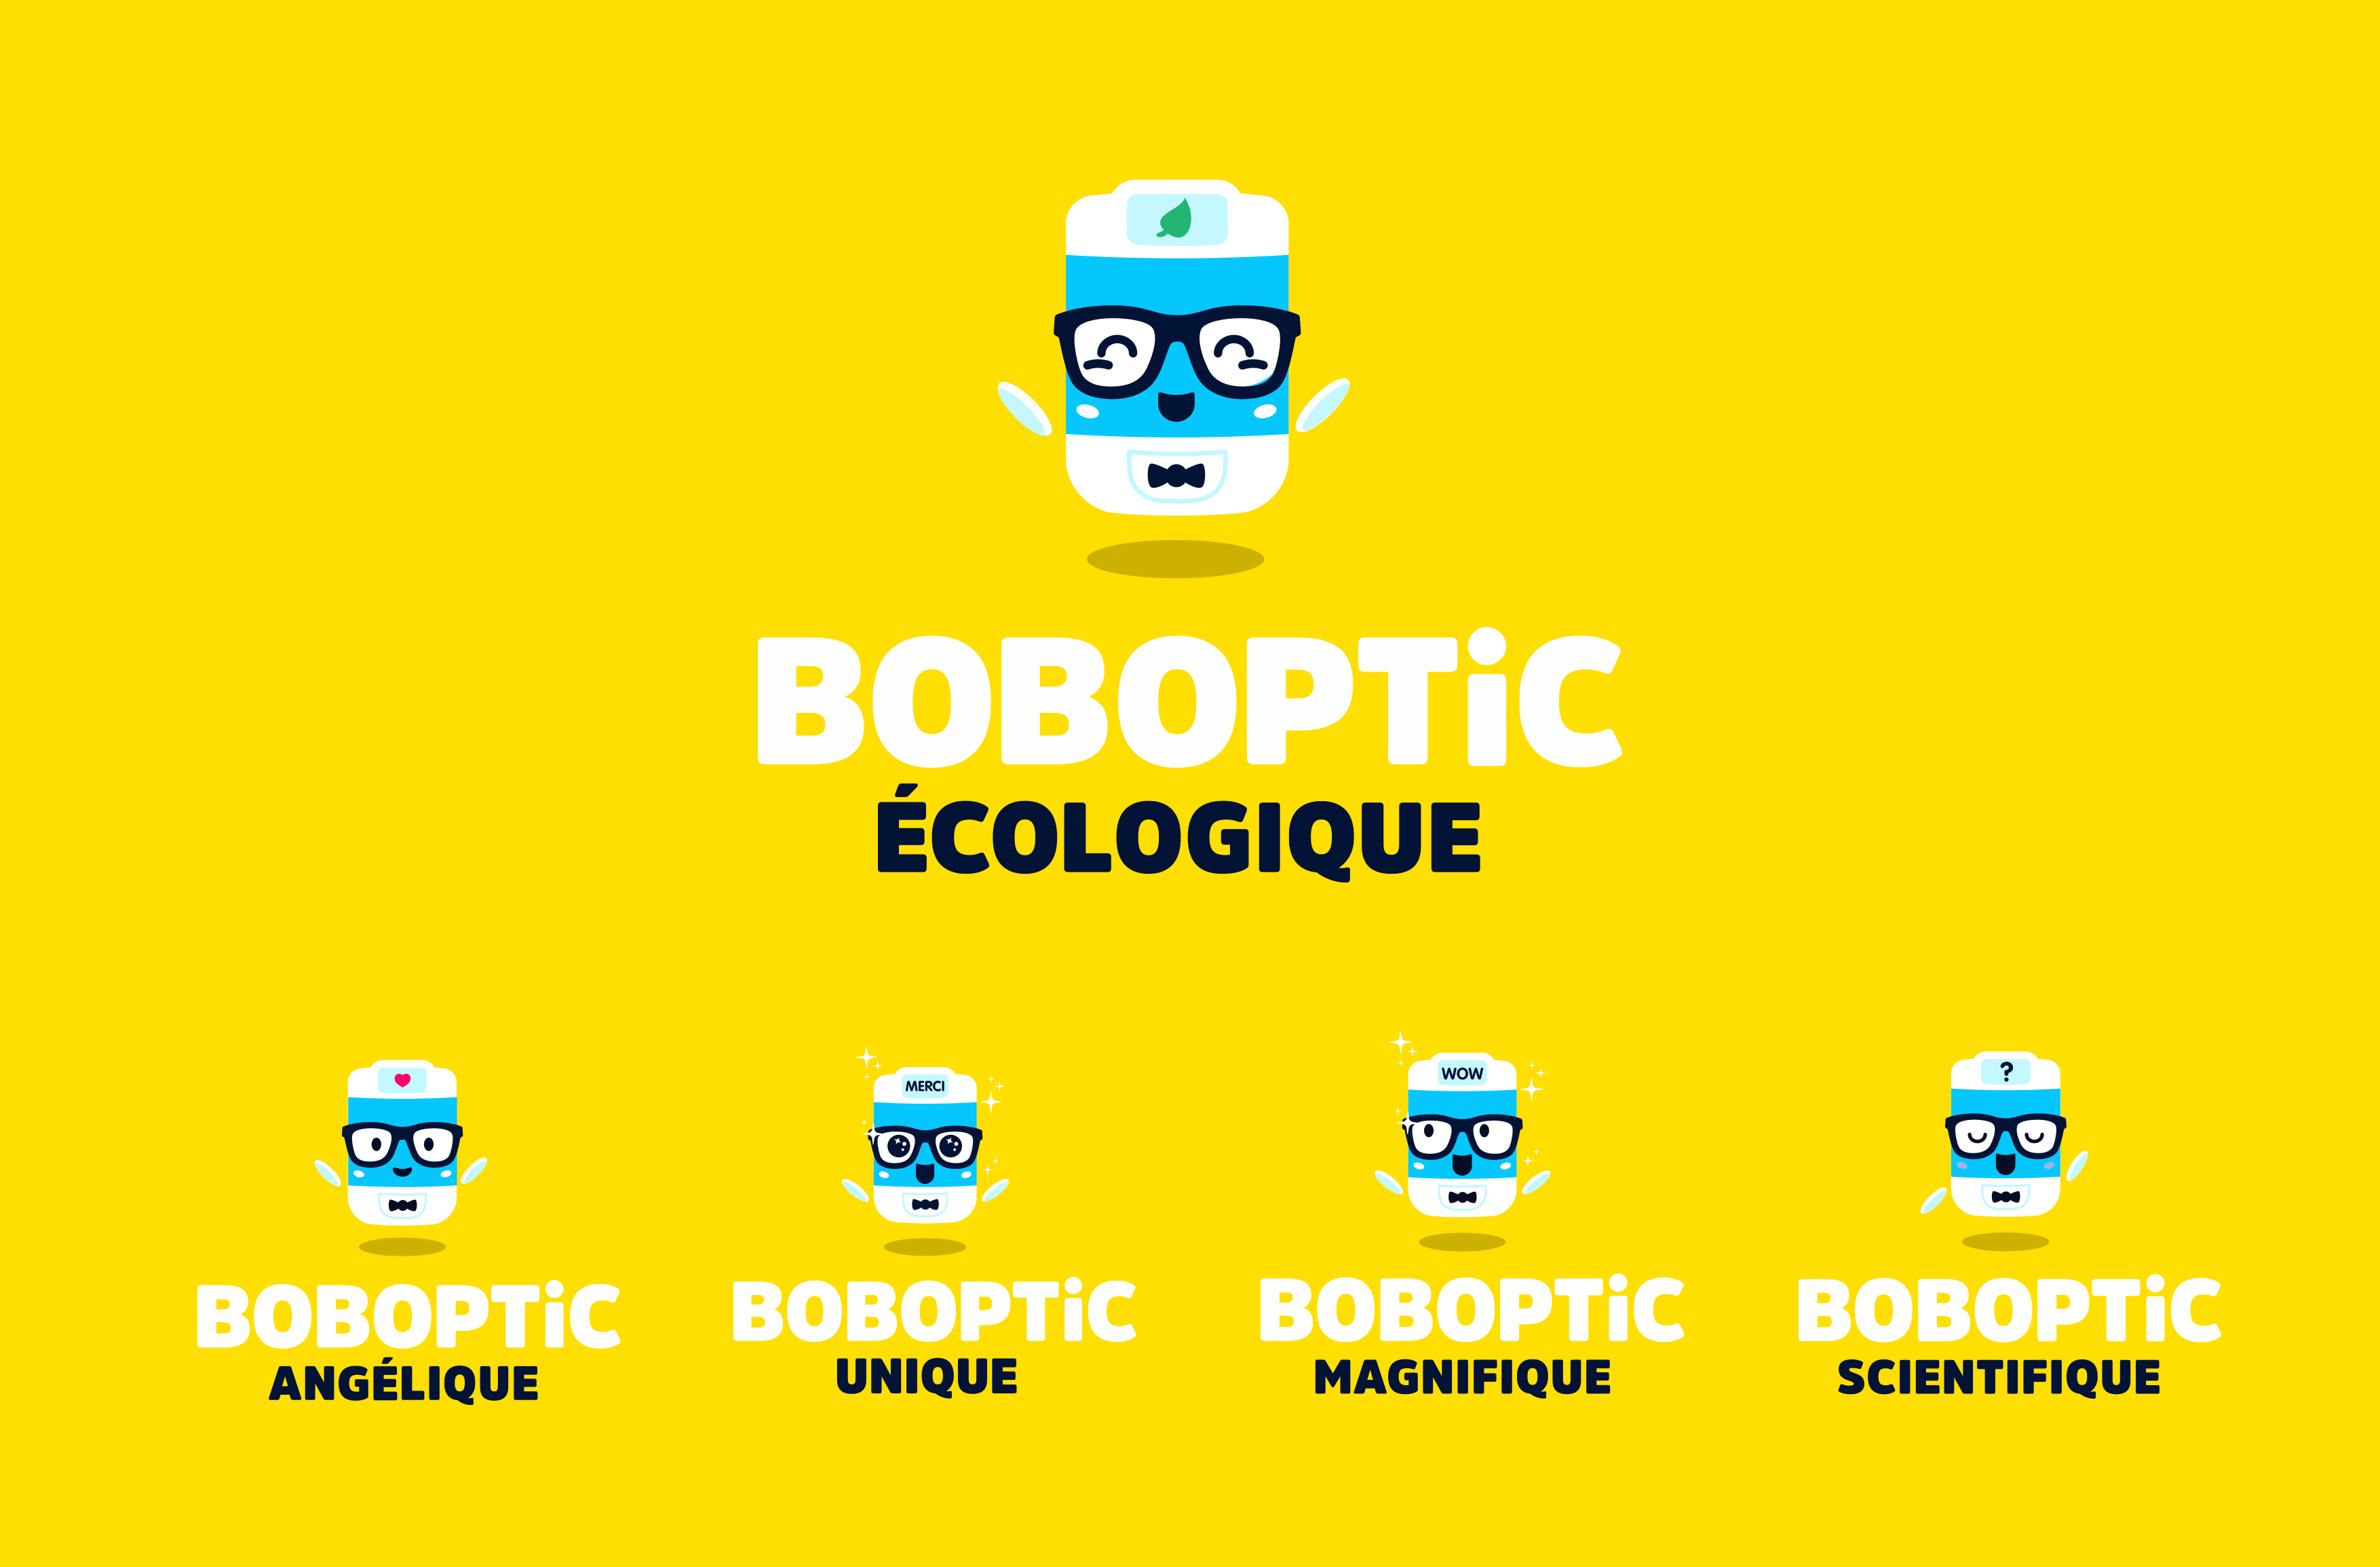 12 – Ecologiqueboboptic